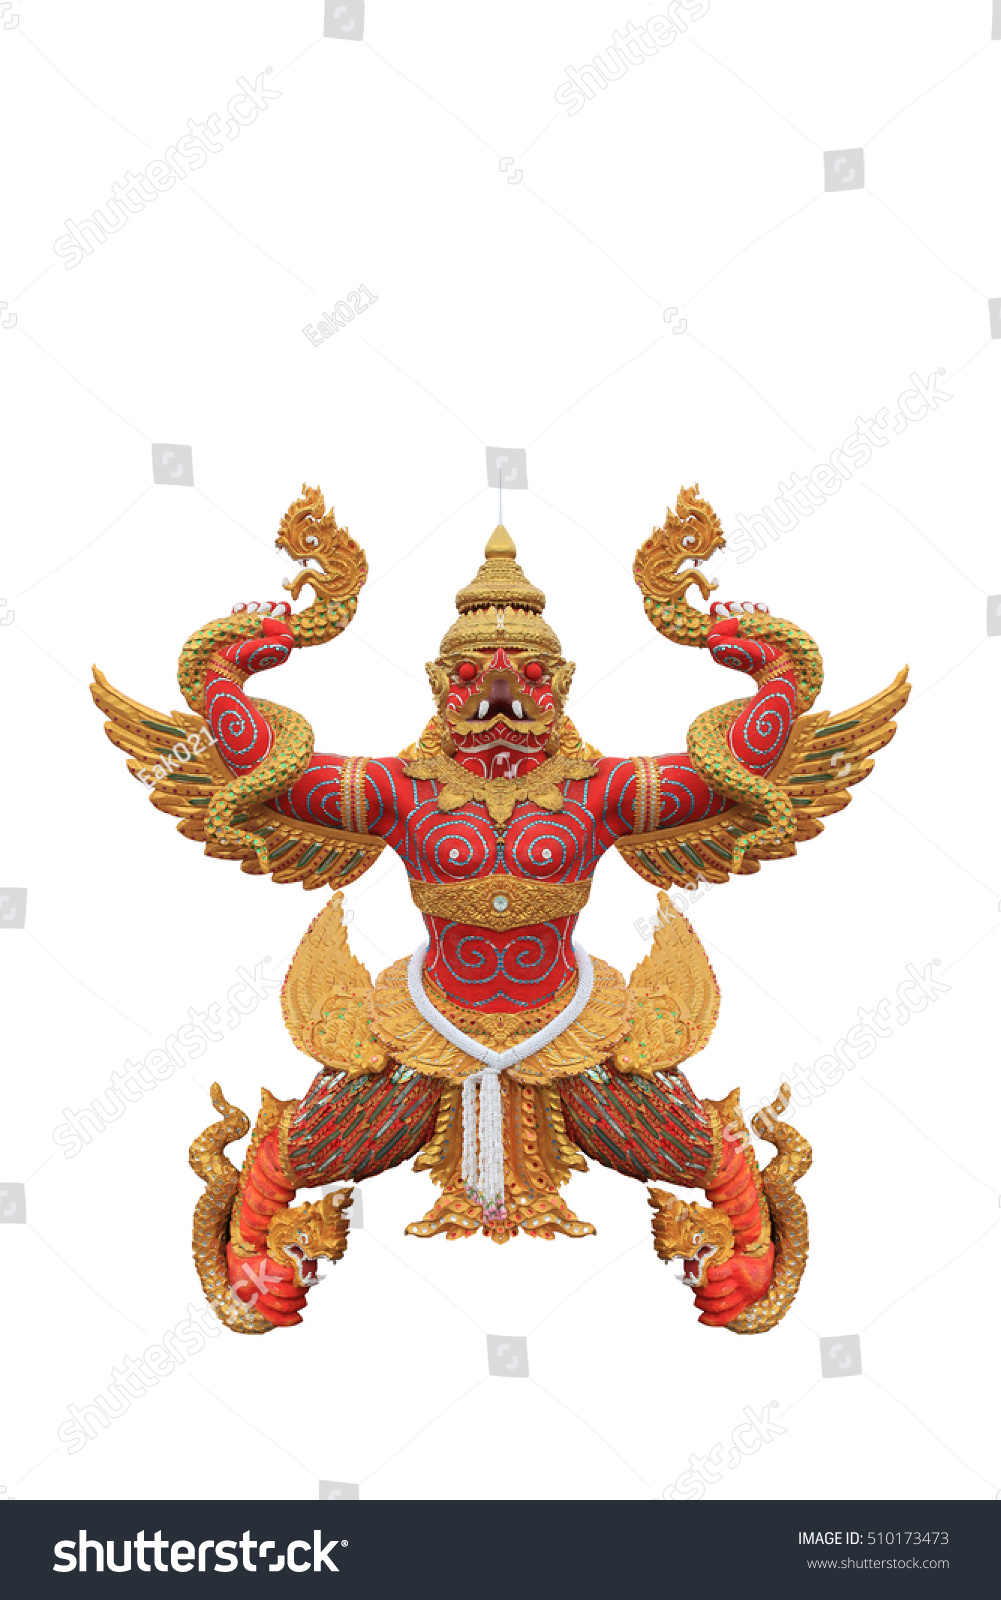  Garuda  Catch Naga  Statue Isolated On Stock Photo 510173473 